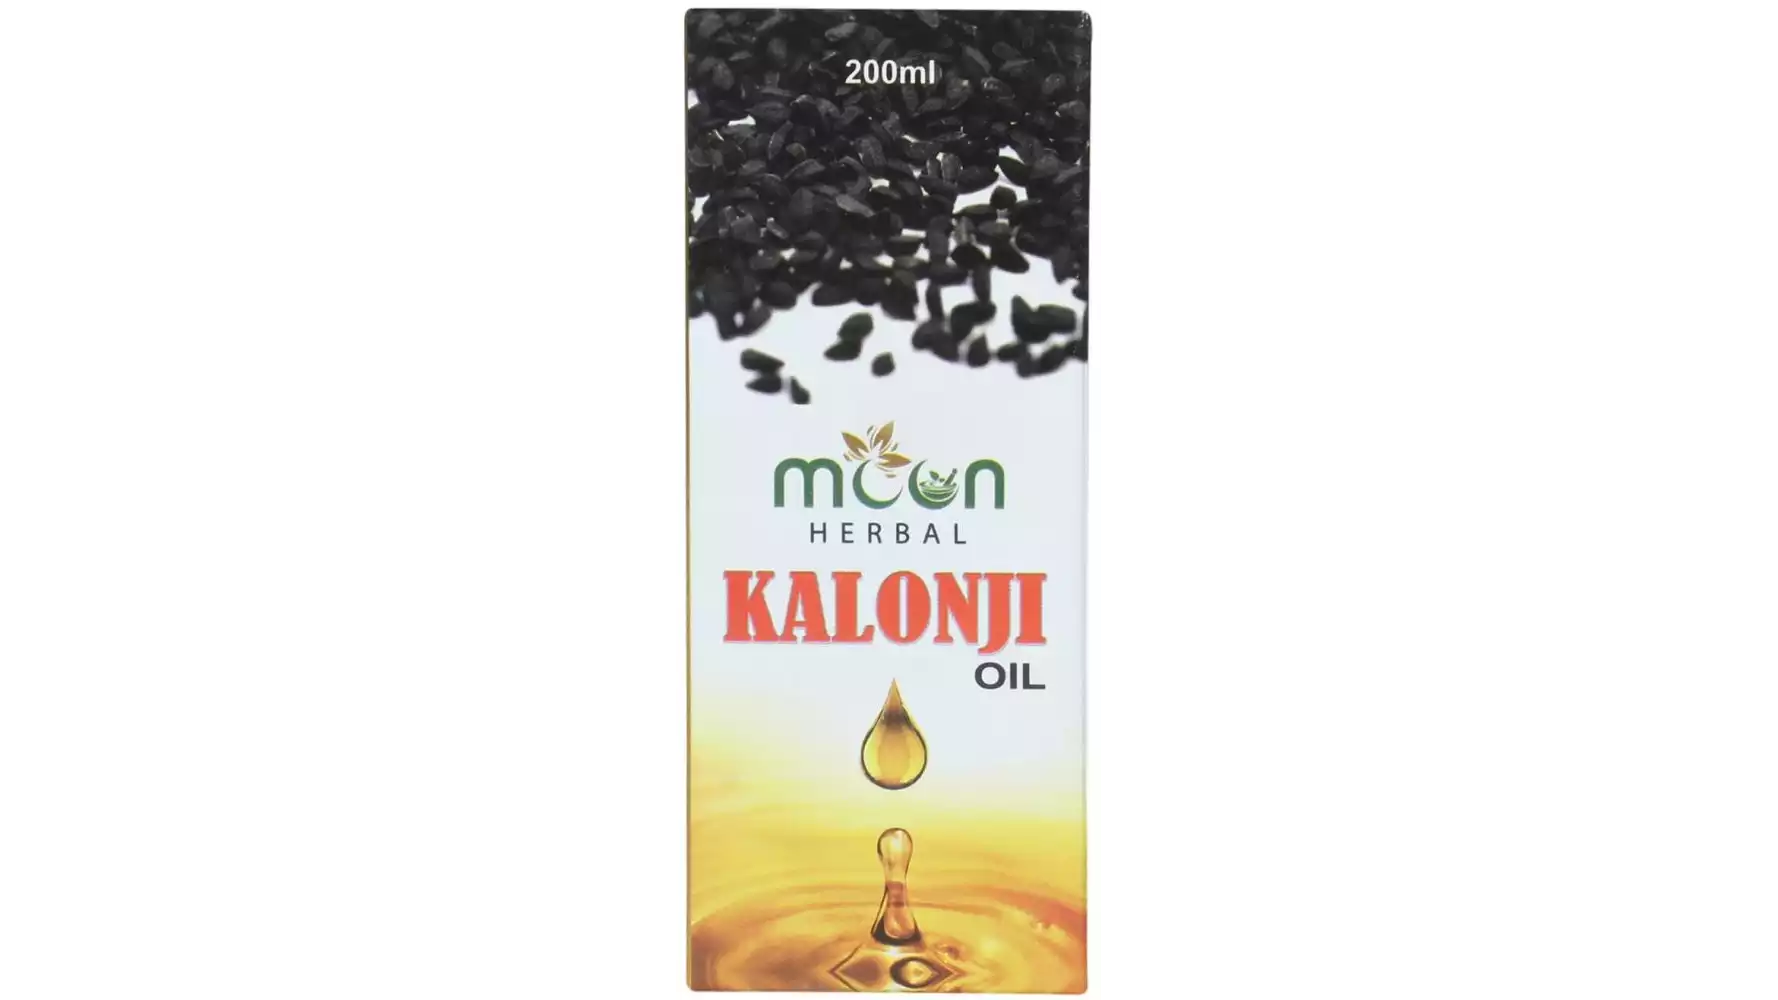 Moon Herbal Kalonji Oil (200ml)